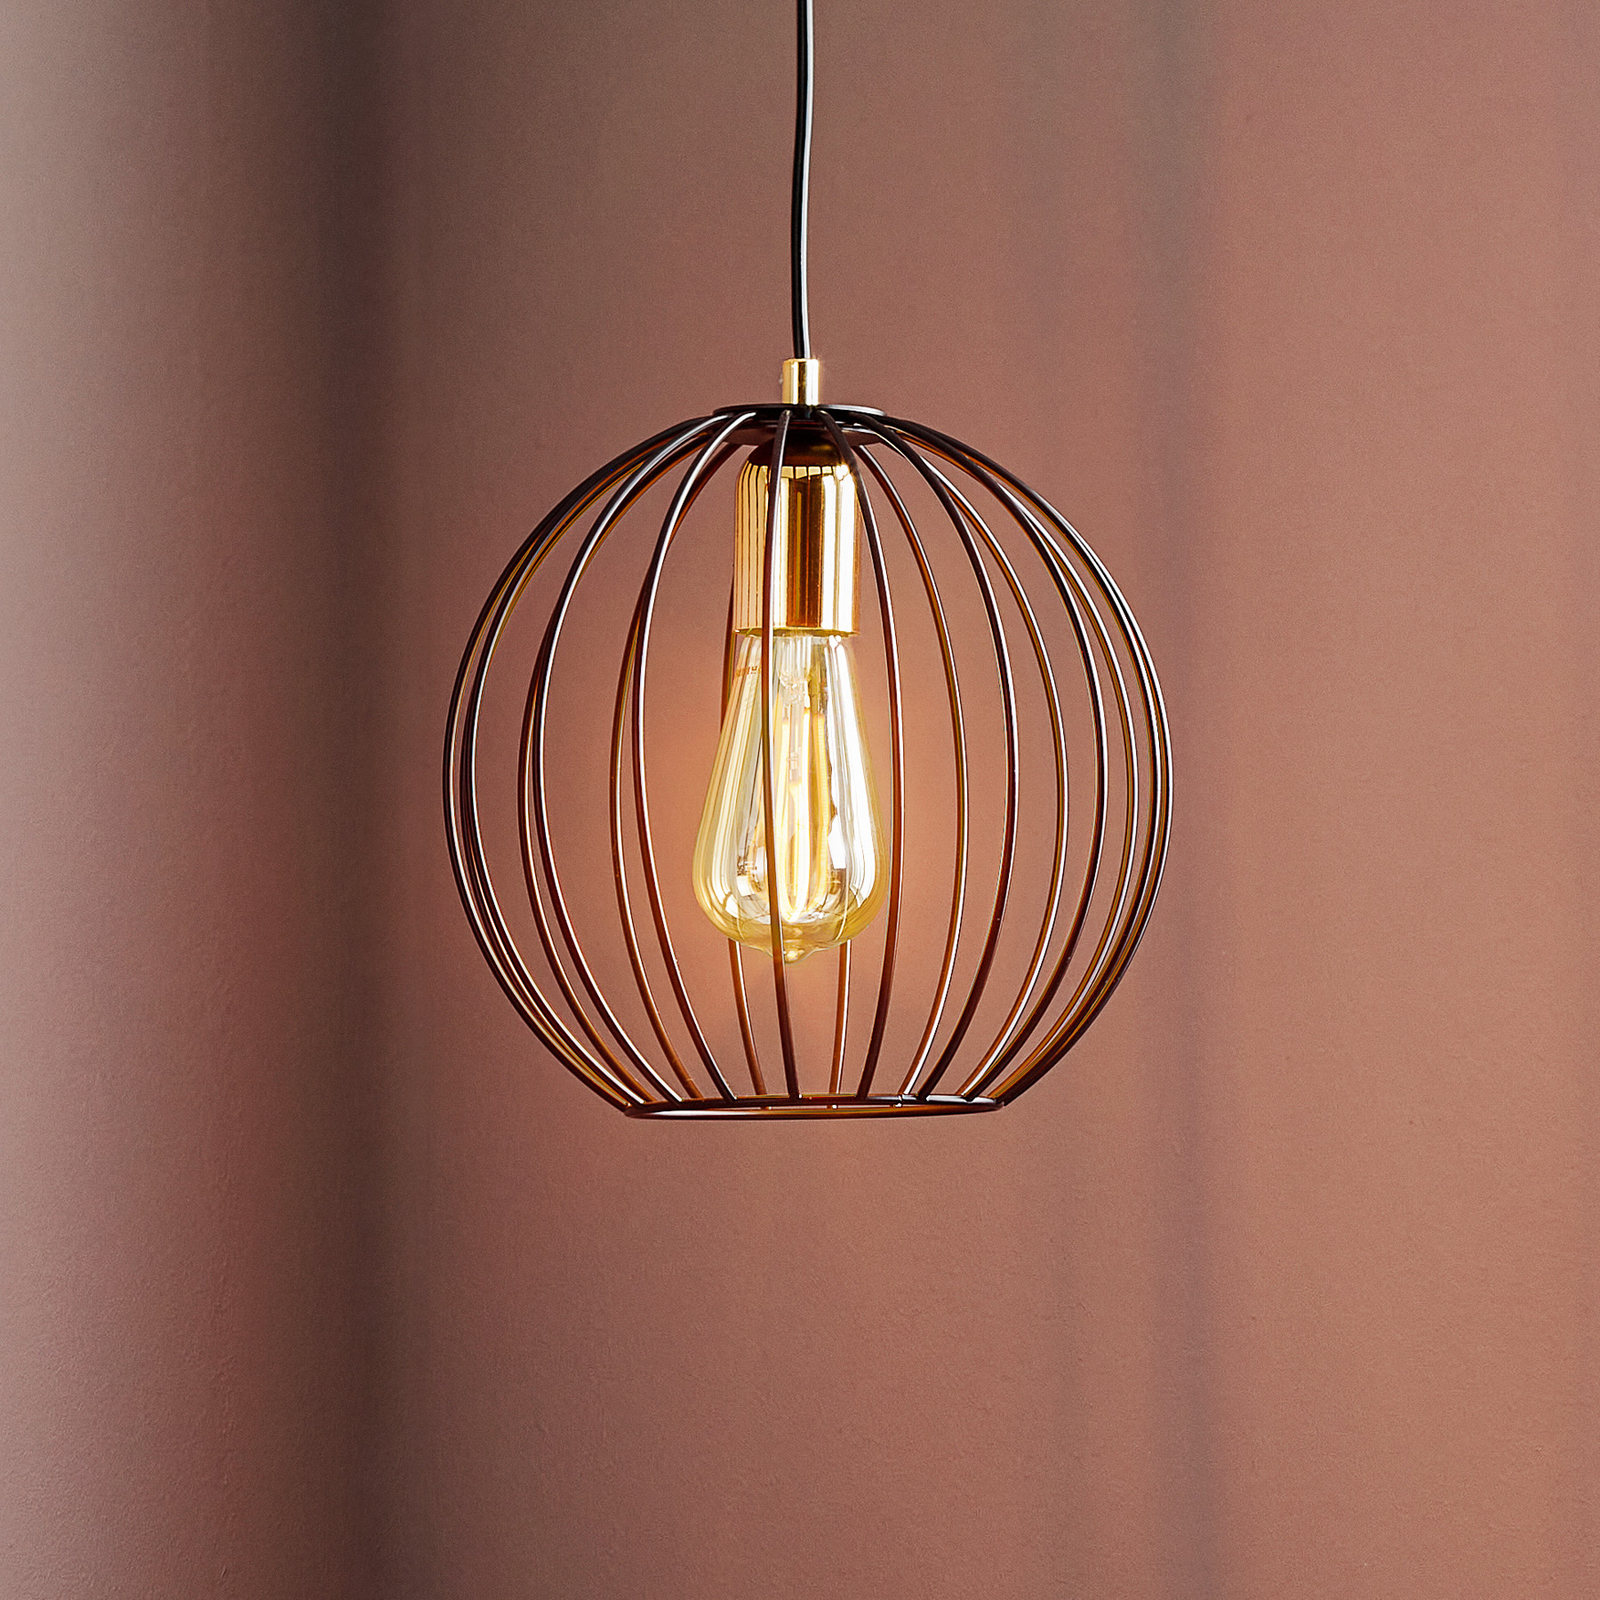 Albio 1 pendant light with cage lampshade black